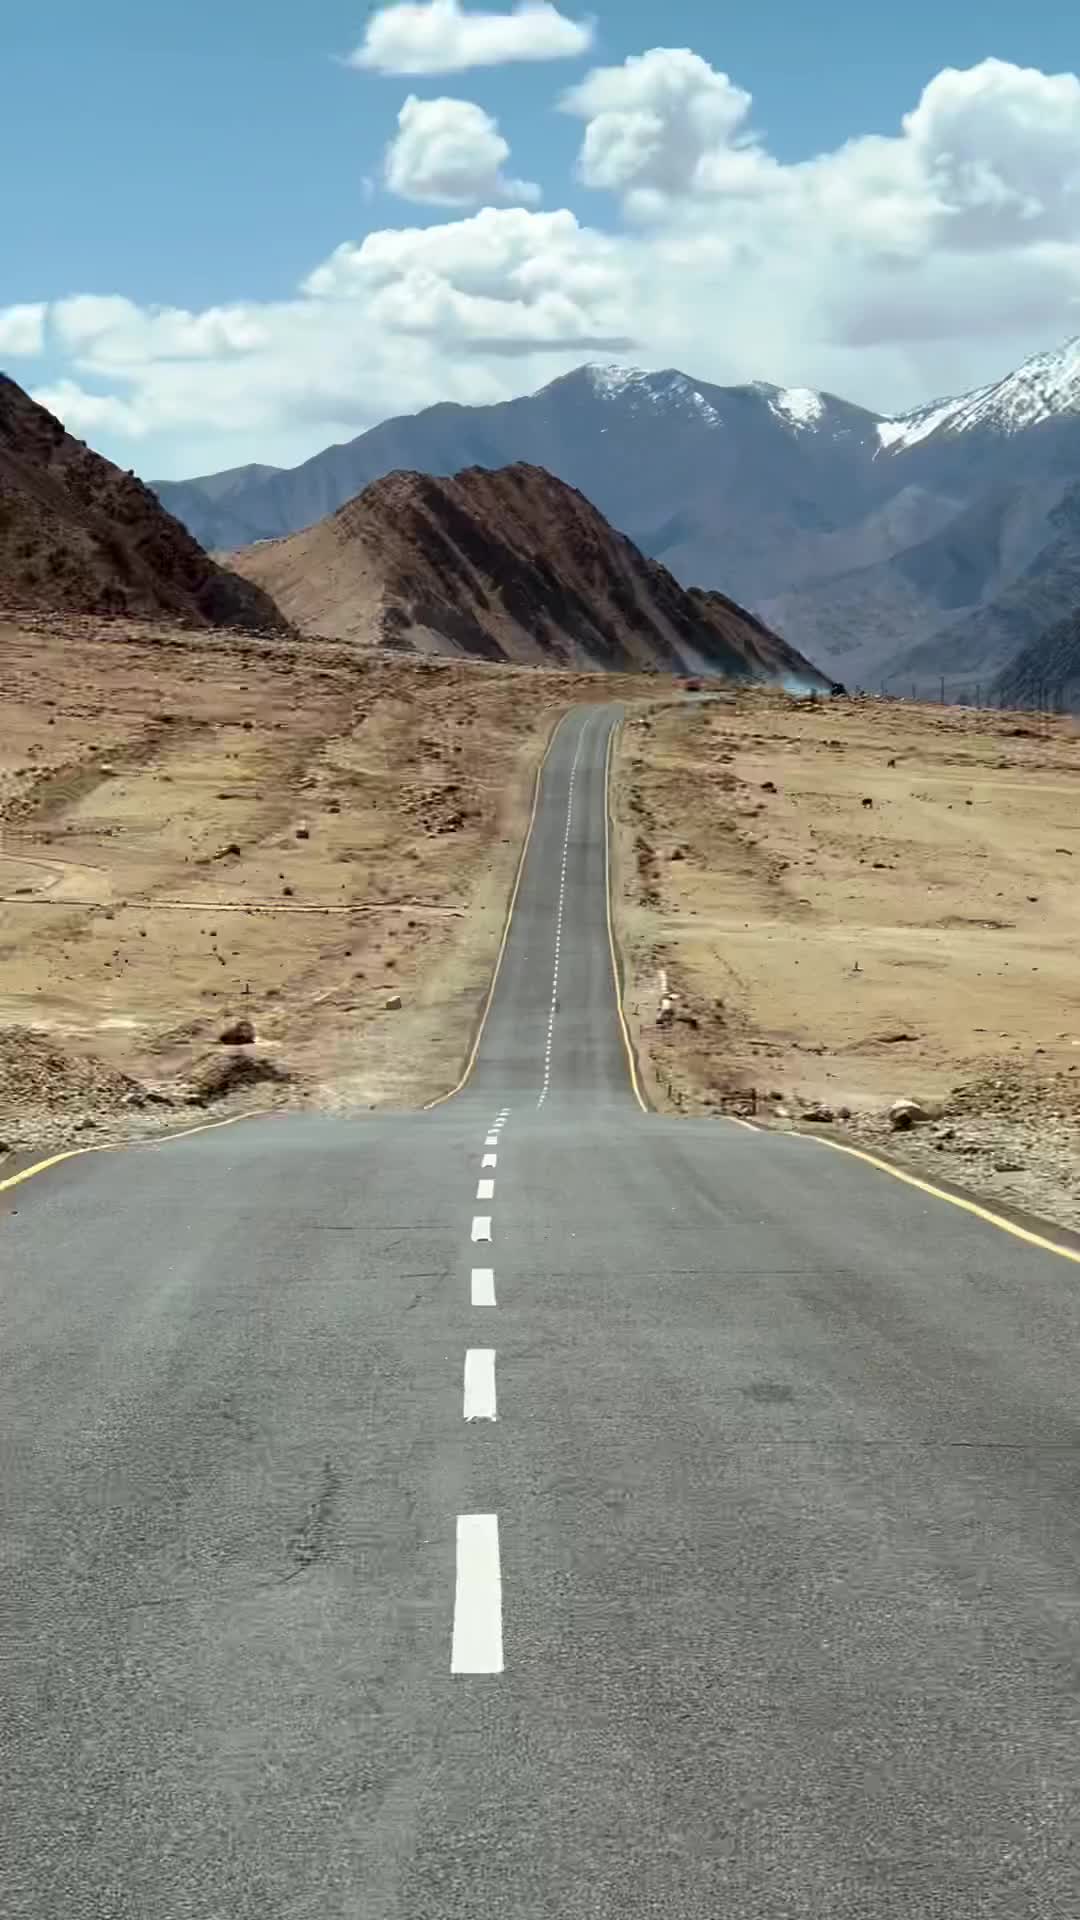 Stunning Leh Roads – Drive Through Breathtaking Scenery